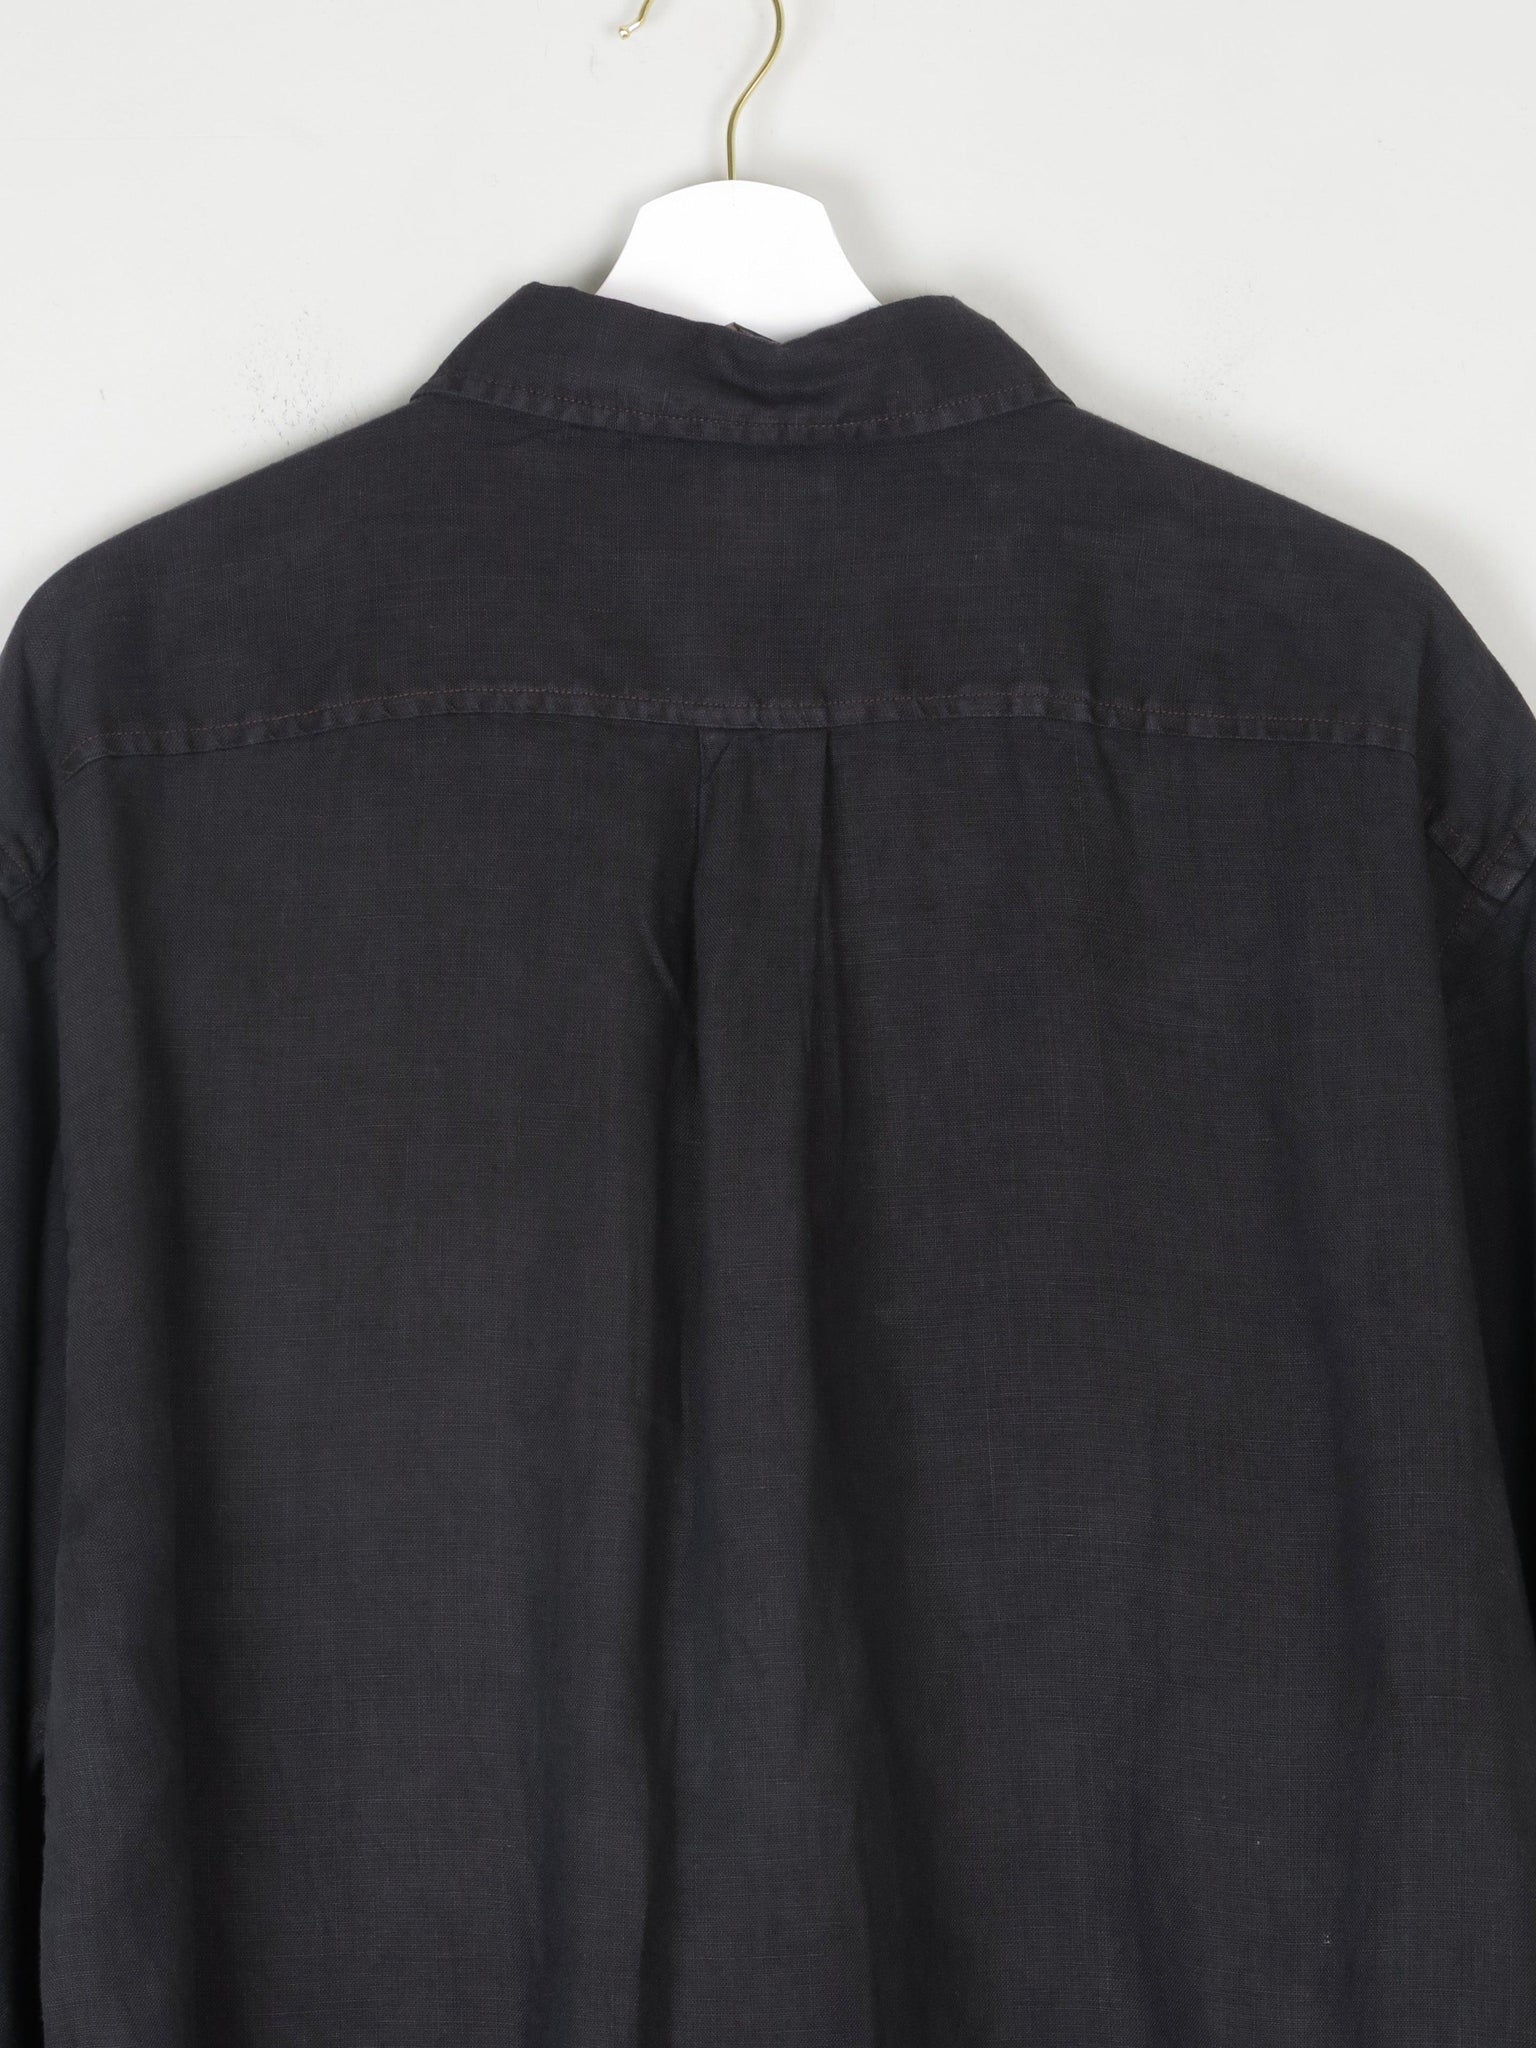 Men's Vintage Black Linen Gap Shirt Oversized M - The Harlequin